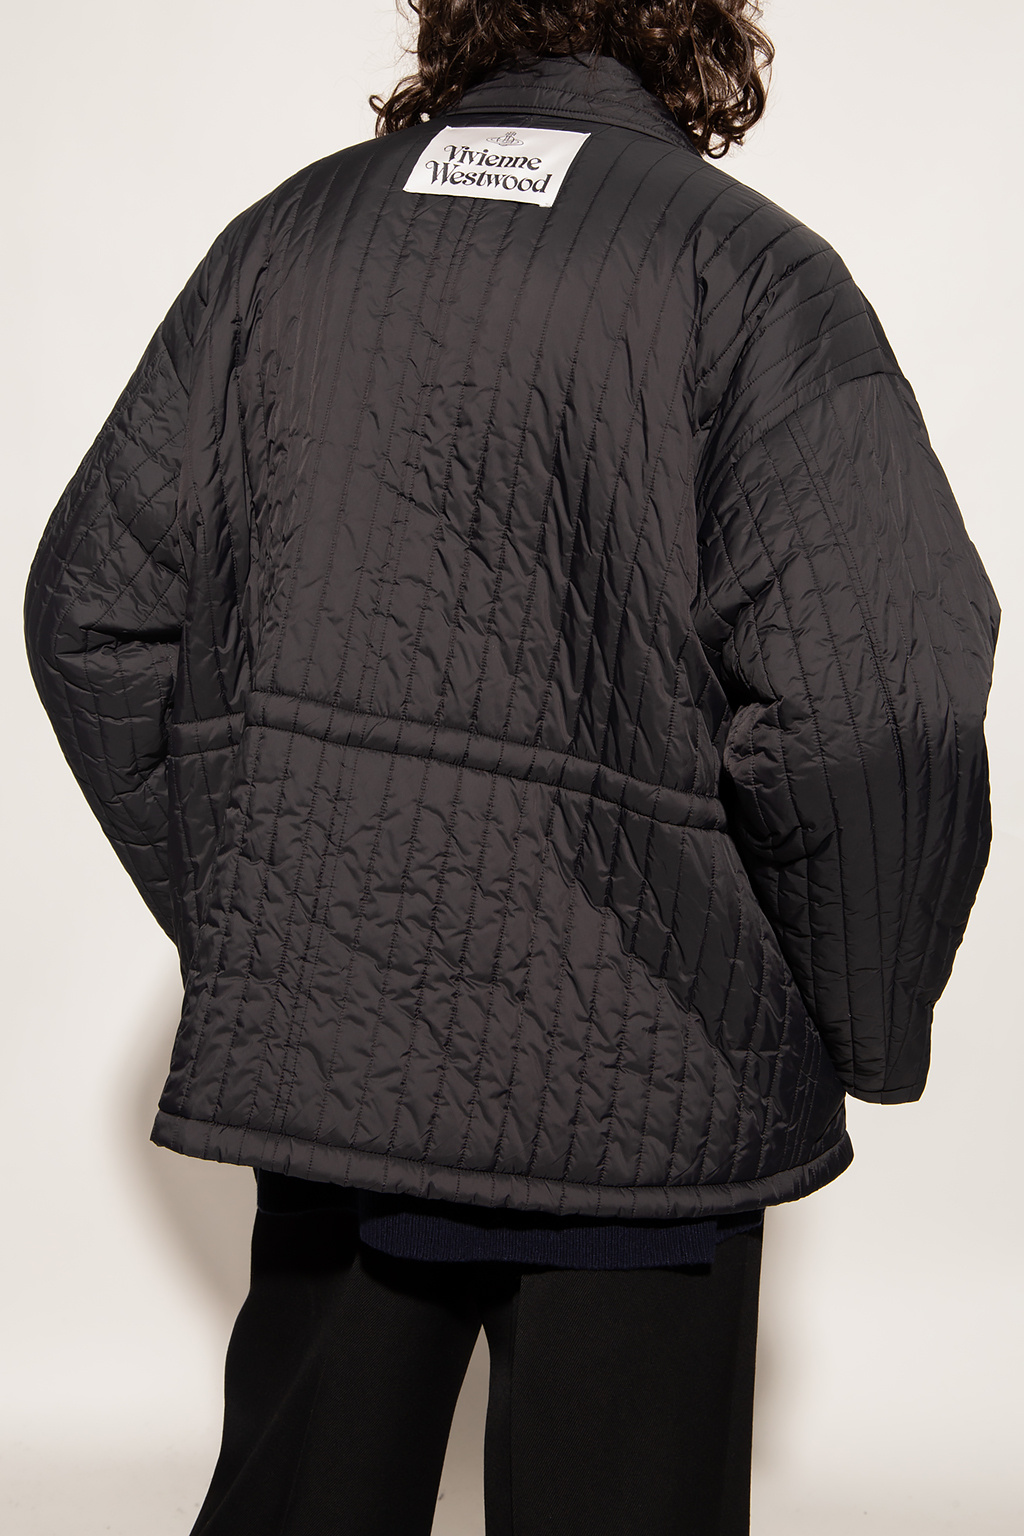 Vivienne Westwood Quilted jacket